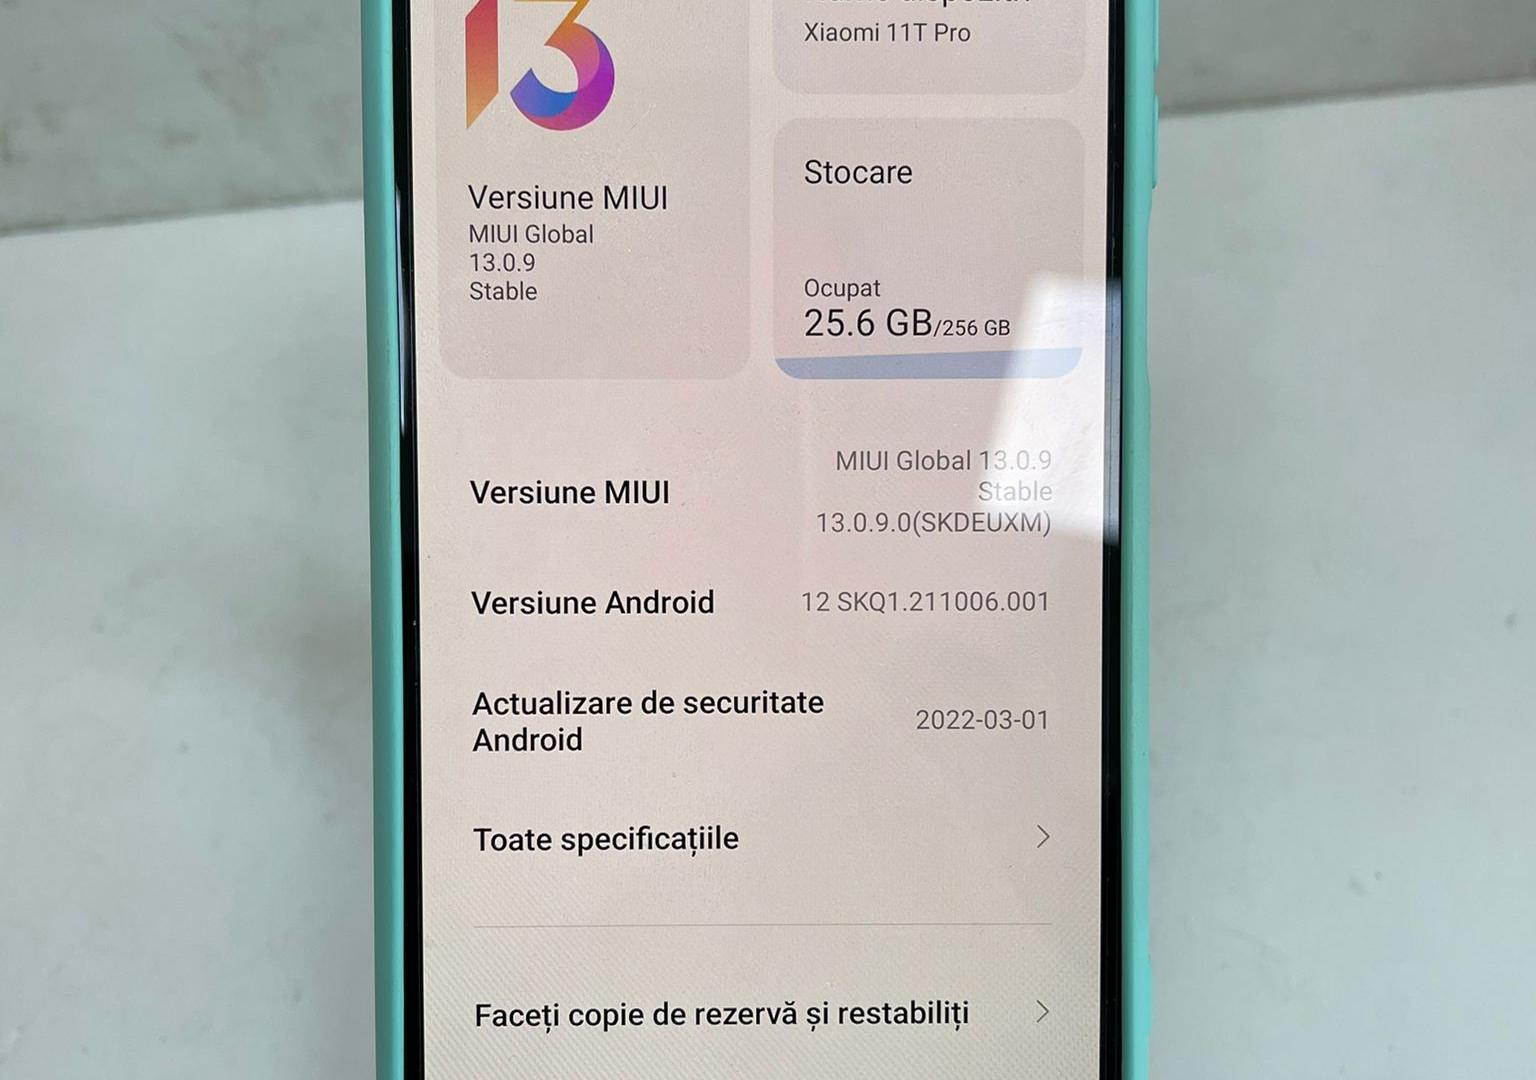 Xiaomi 11T Pro image 3